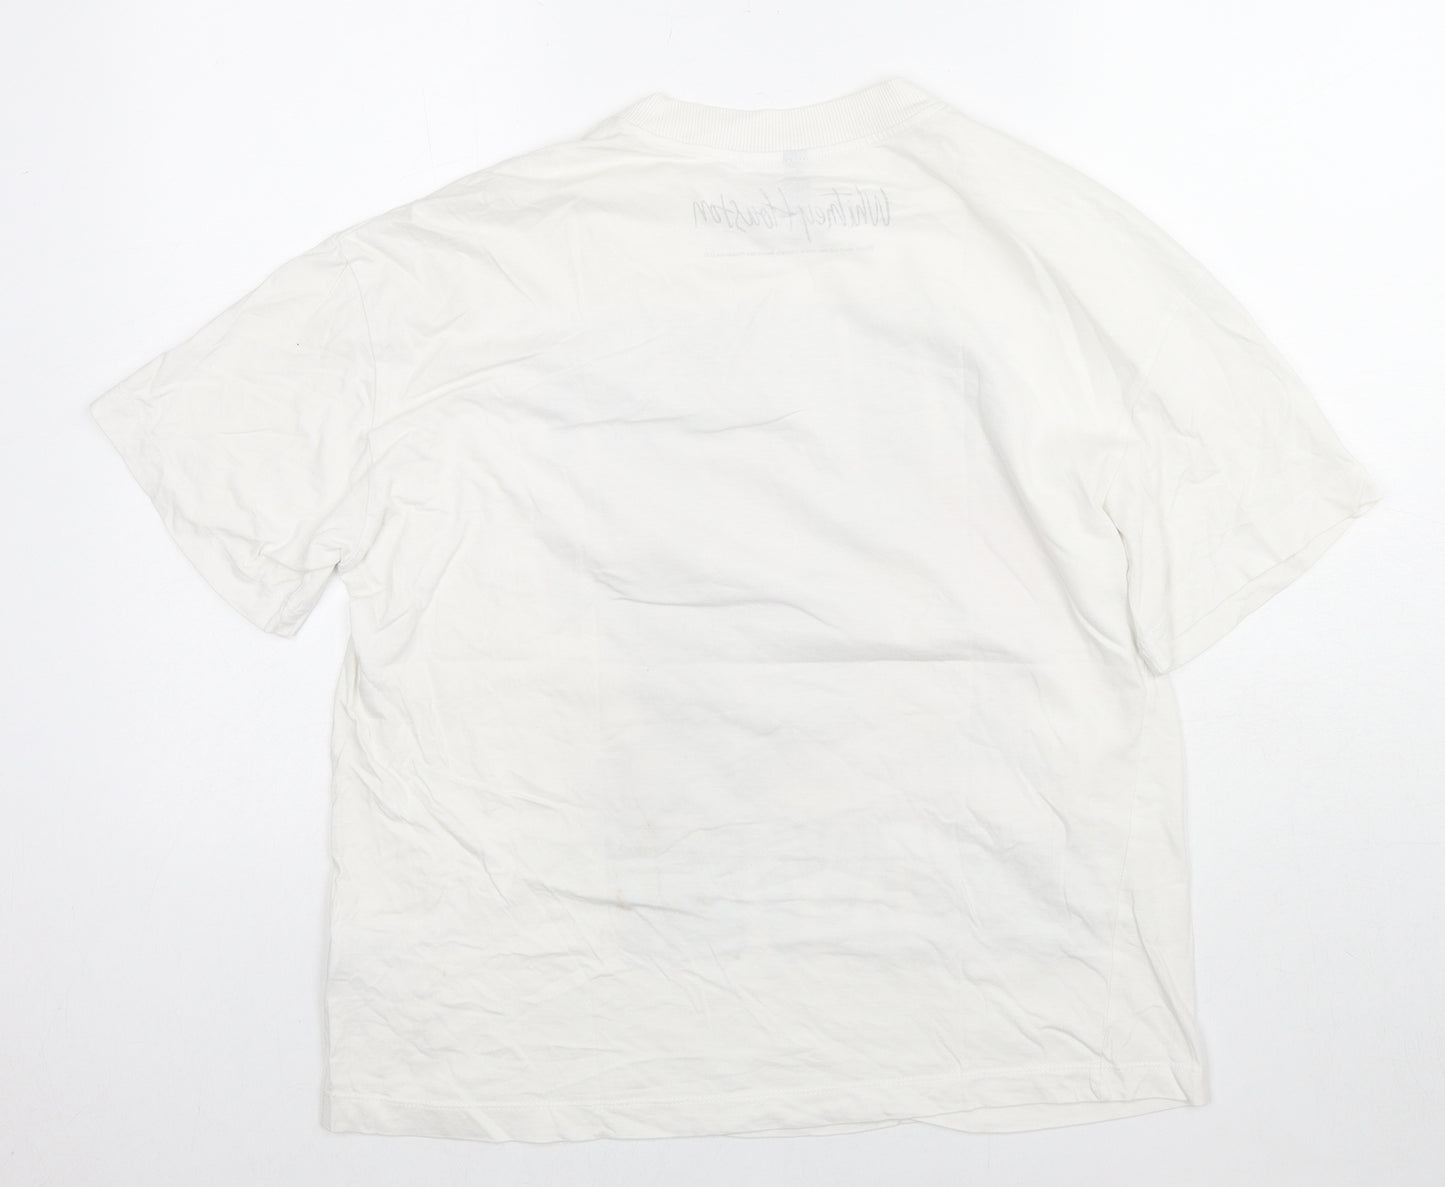 H&M Womens White Cotton Basic T-Shirt Size S Round Neck - Whitney Houston